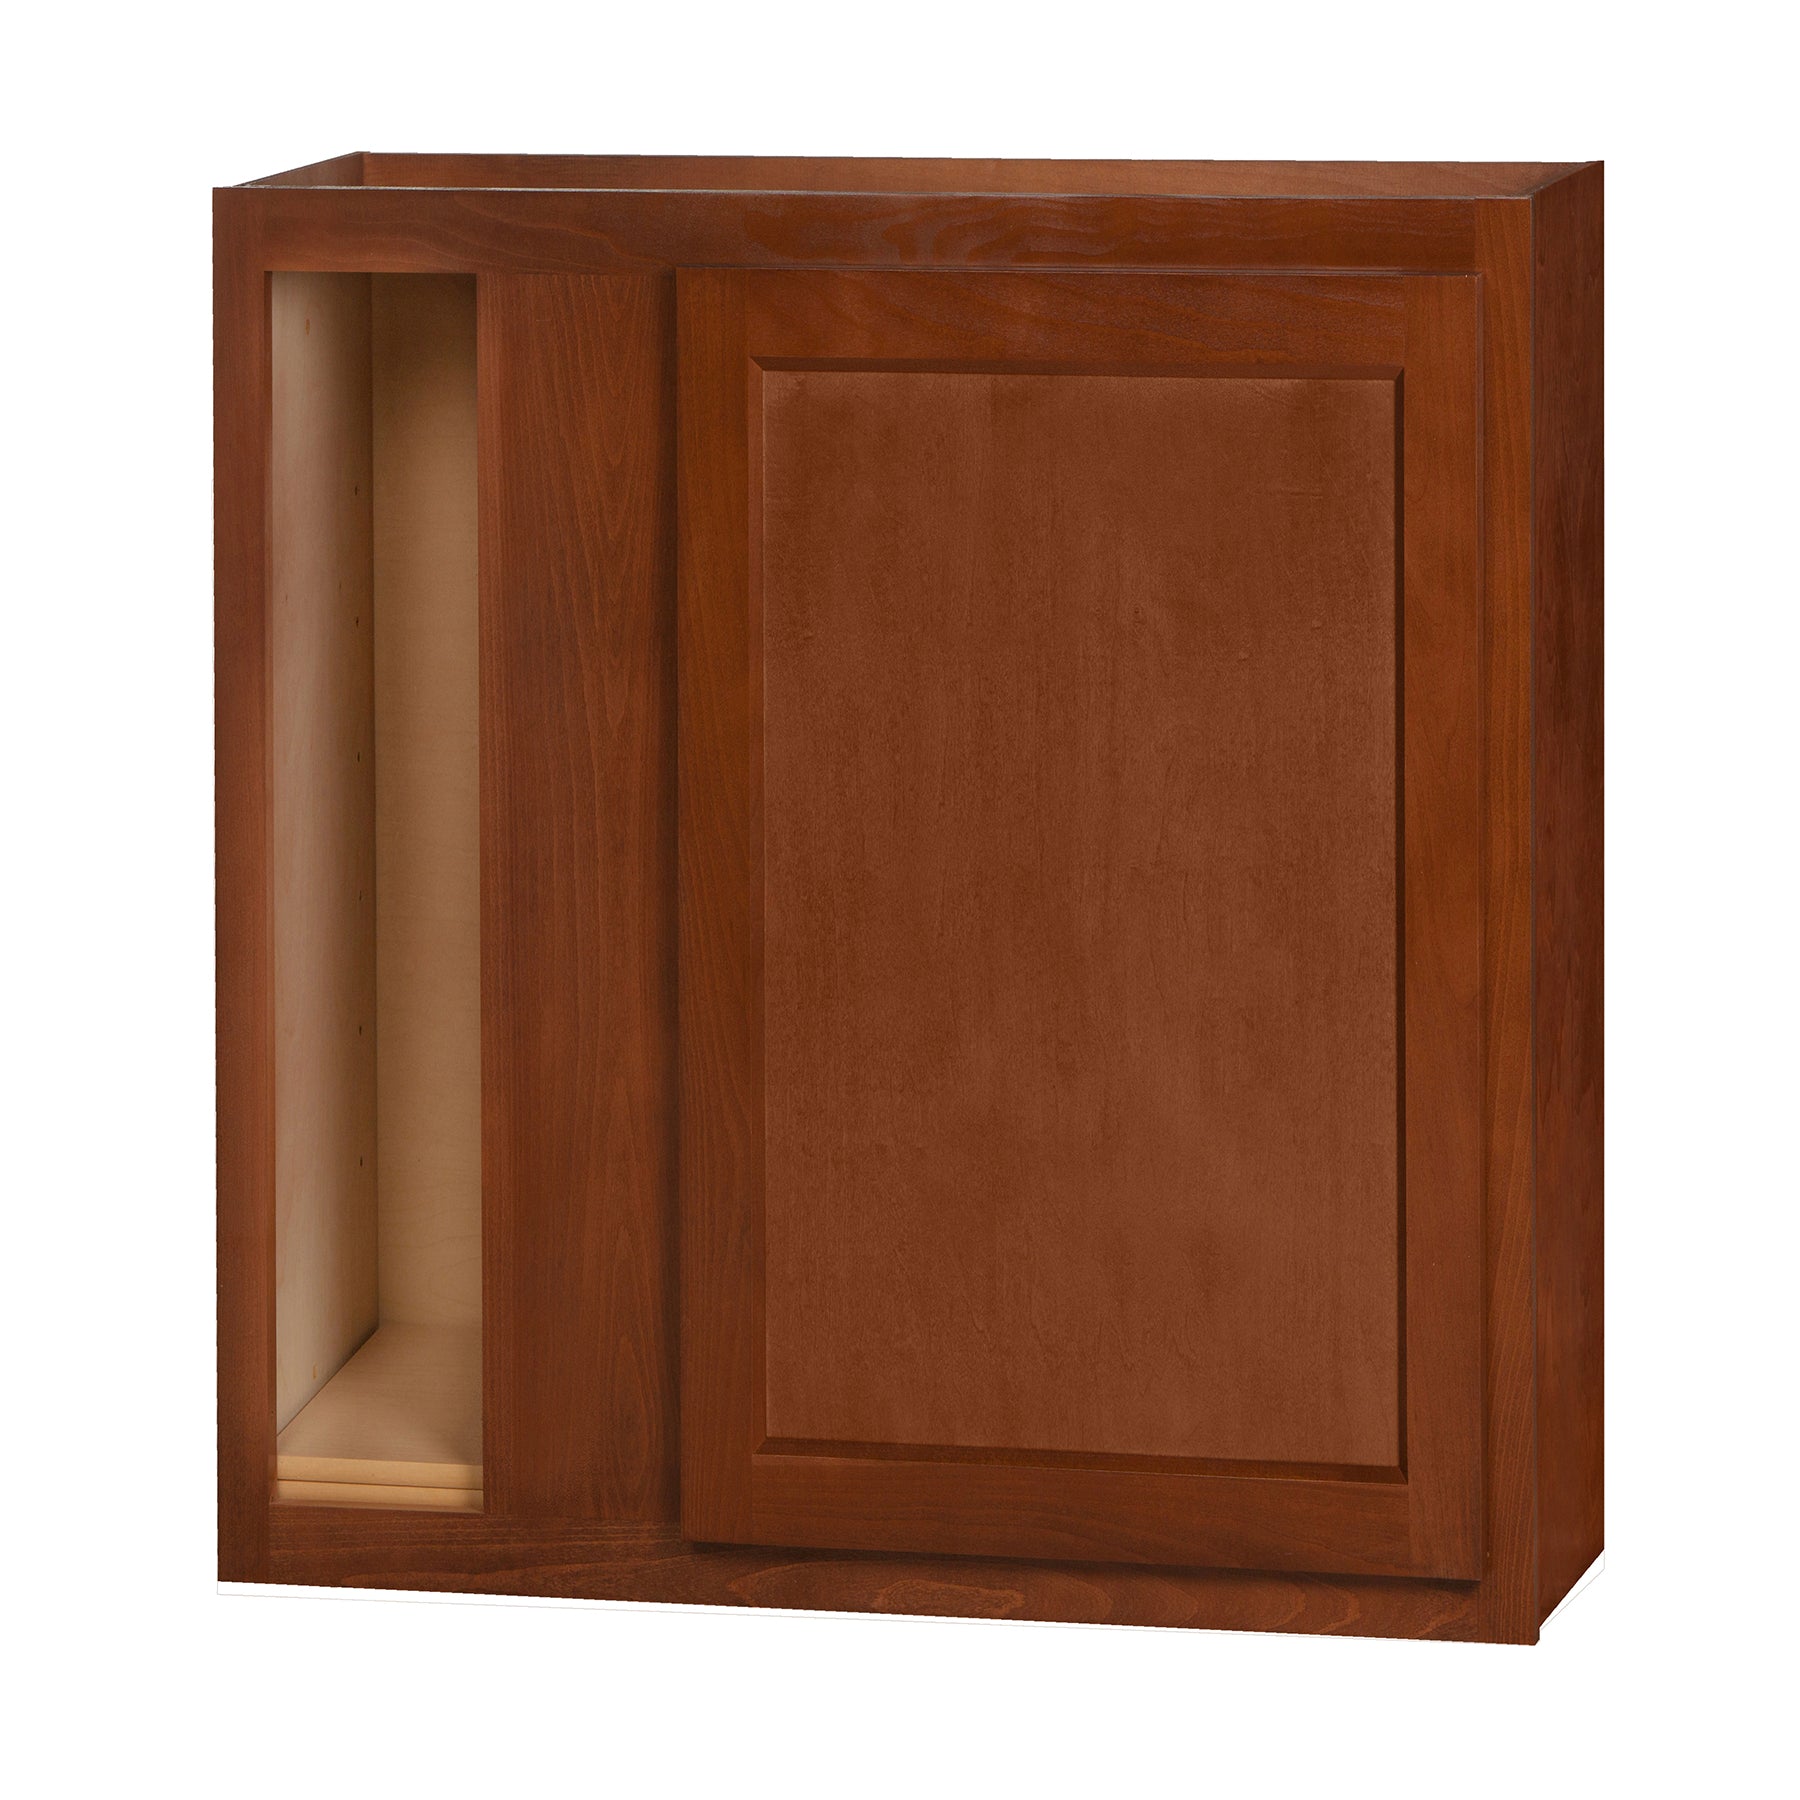 36 inch Wall Corner Cabinet - Single Door - Glenwood Shaker - 36 Inch W x 36 Inch H x 12 Inch D